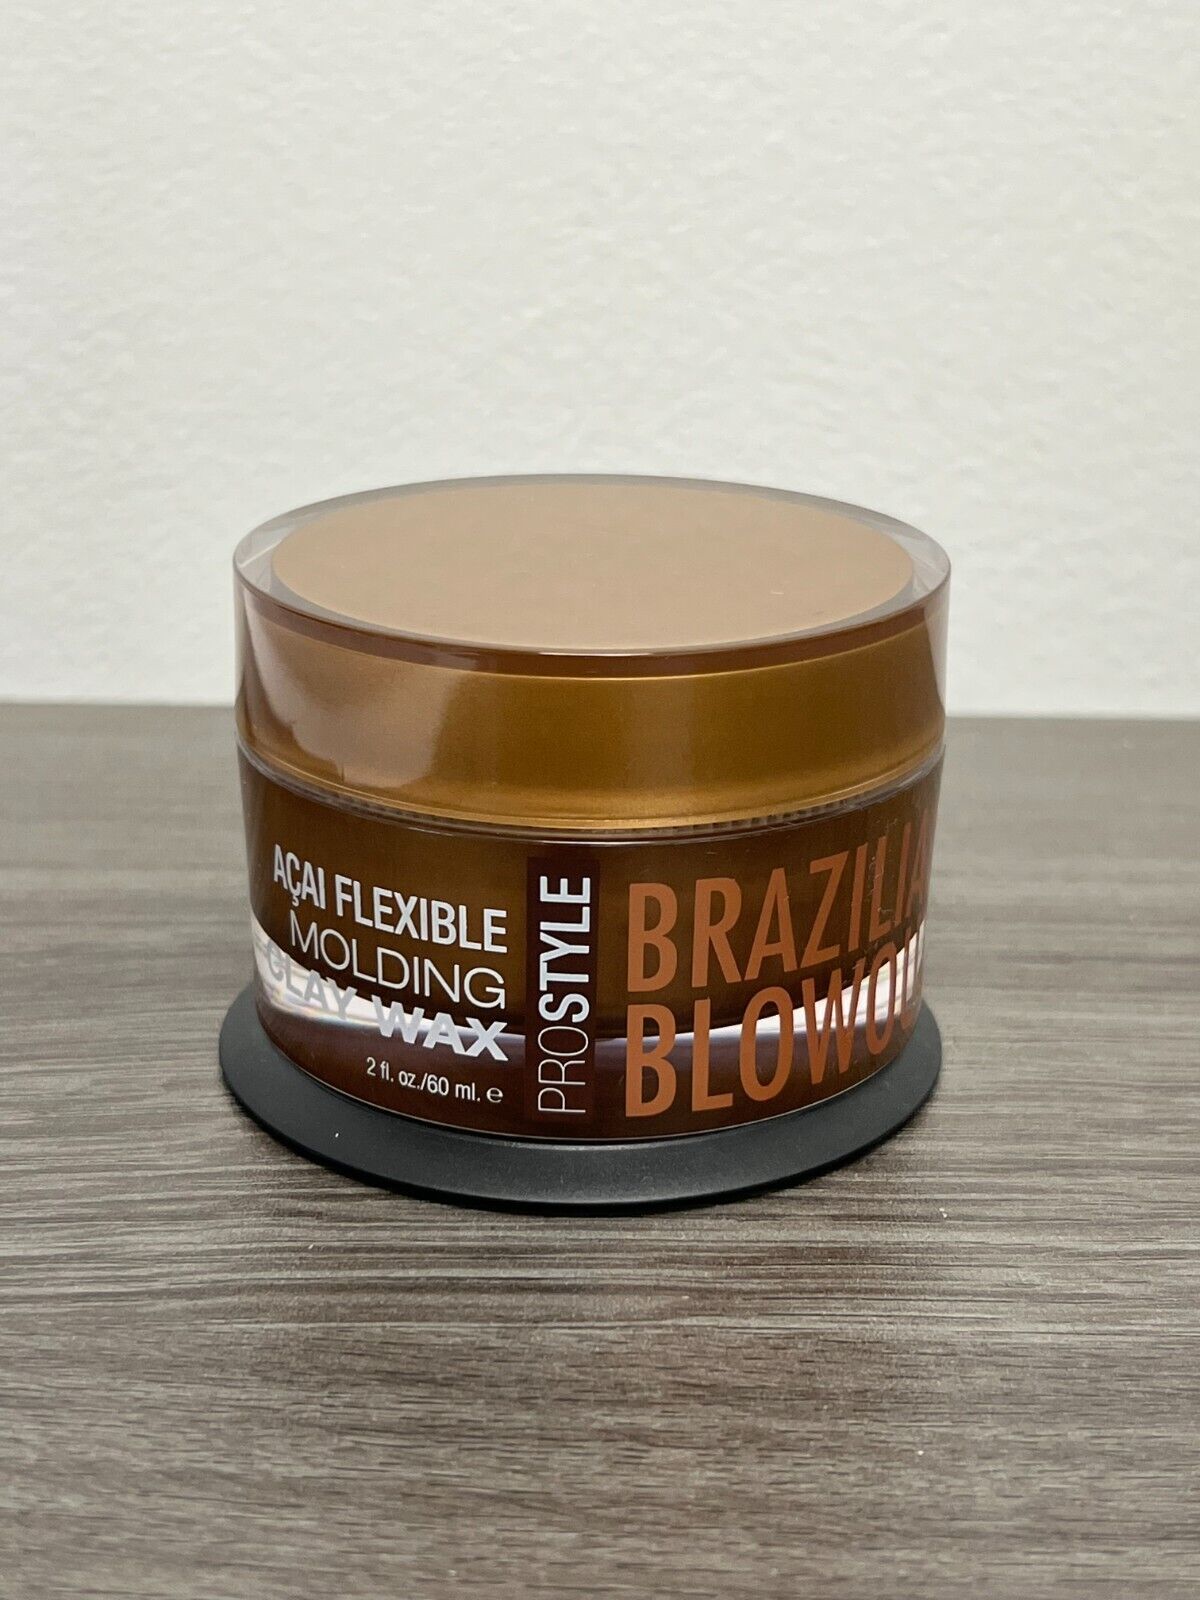 Brazilian Blowout Acai Flexible Molding Clay Wax 2 fl oz Shapes Texturize NEW! - $37.40